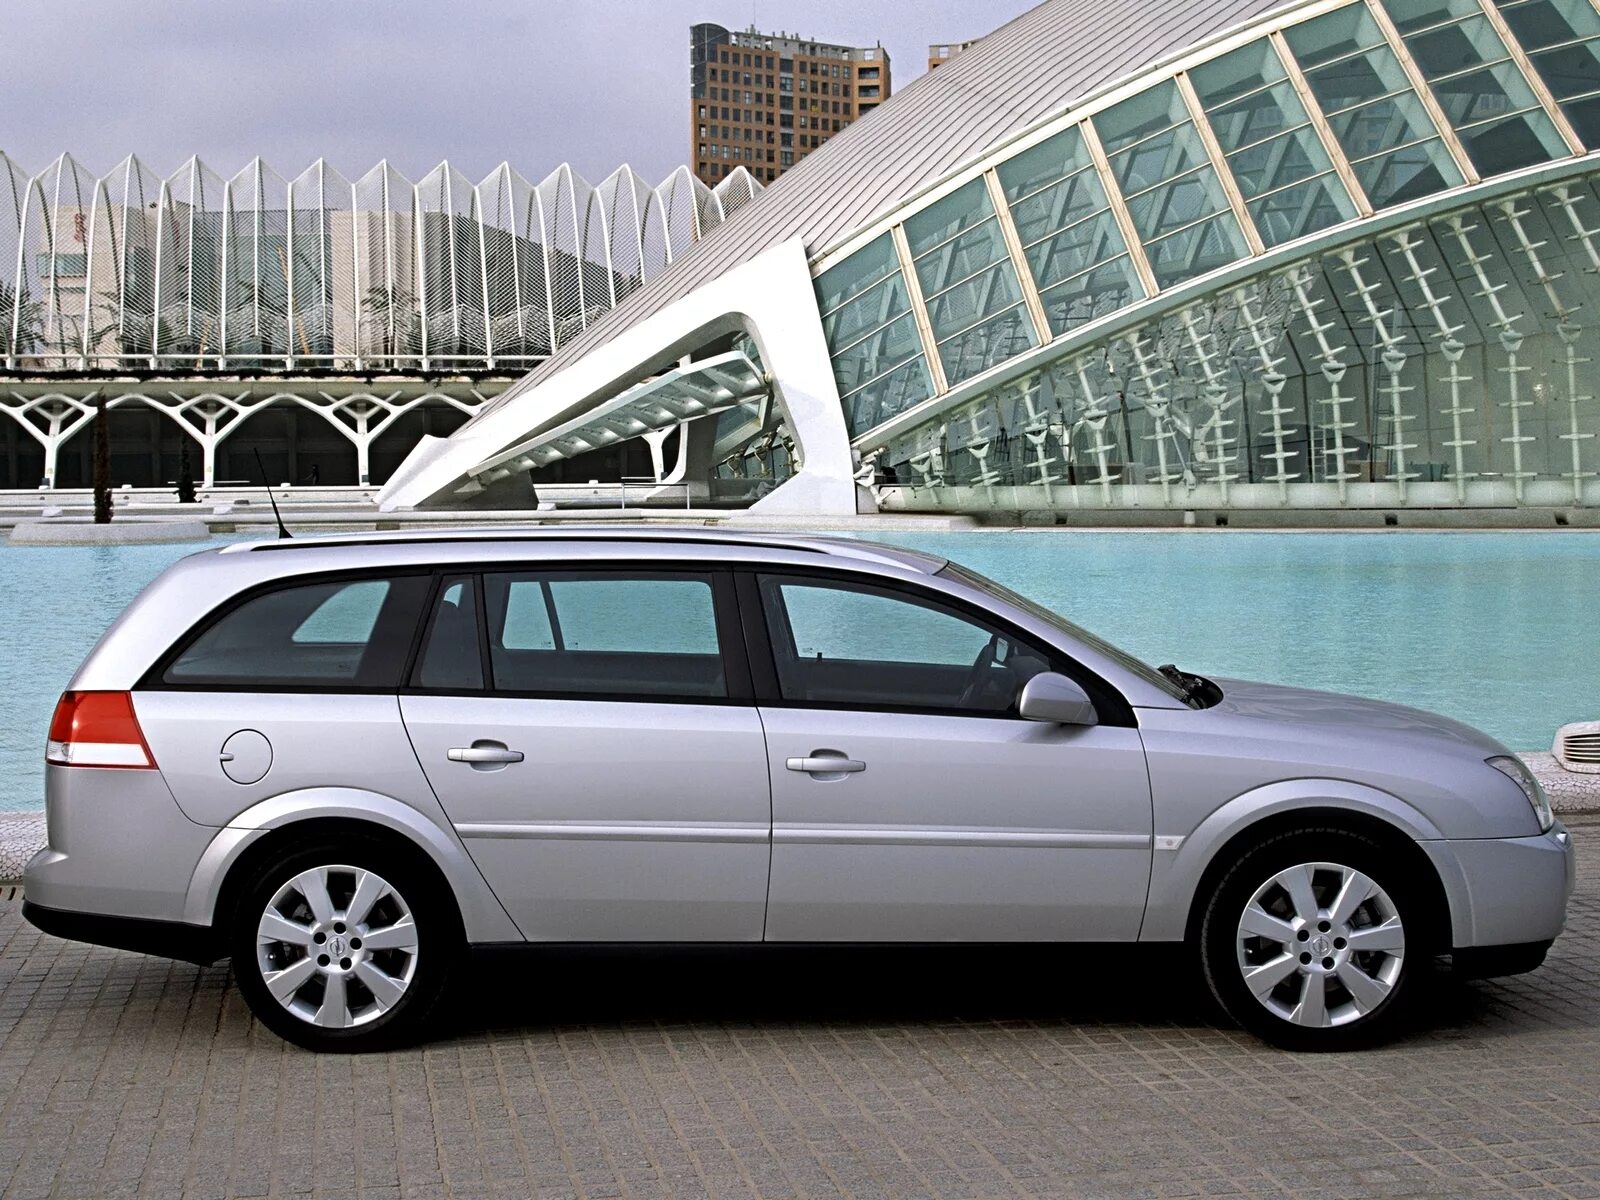 Opel Vectra c 2003 универсал. Opel Vectra c 2005 универсал. Opel Vectra c 2008 универсал. Опель Вектра с 2005 универсал.